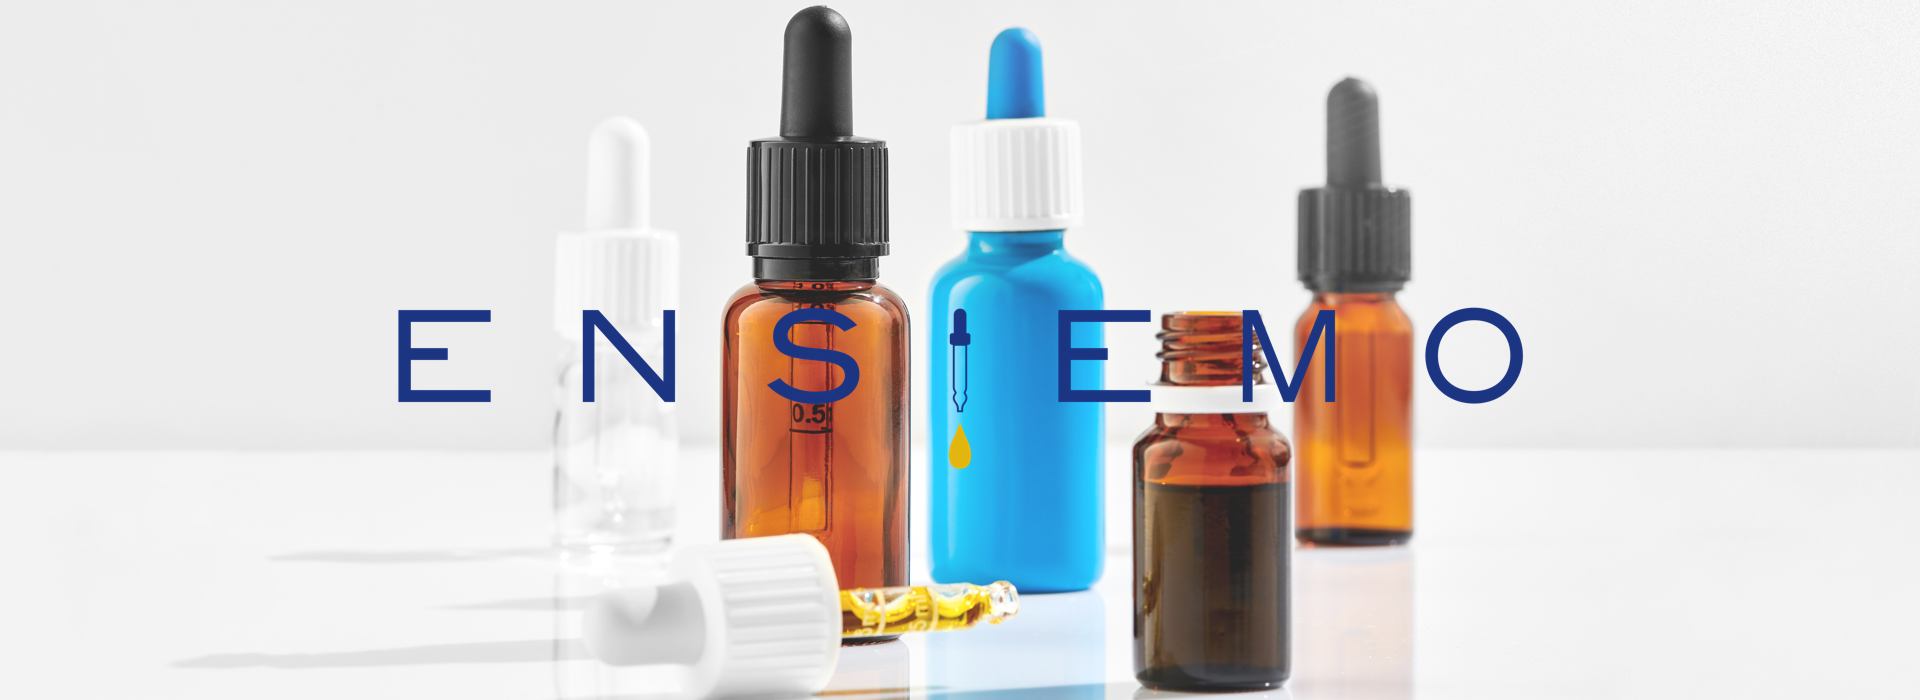 SGD Pharma – Tropfflaschen Sortiment aus Glas – Ensiemo